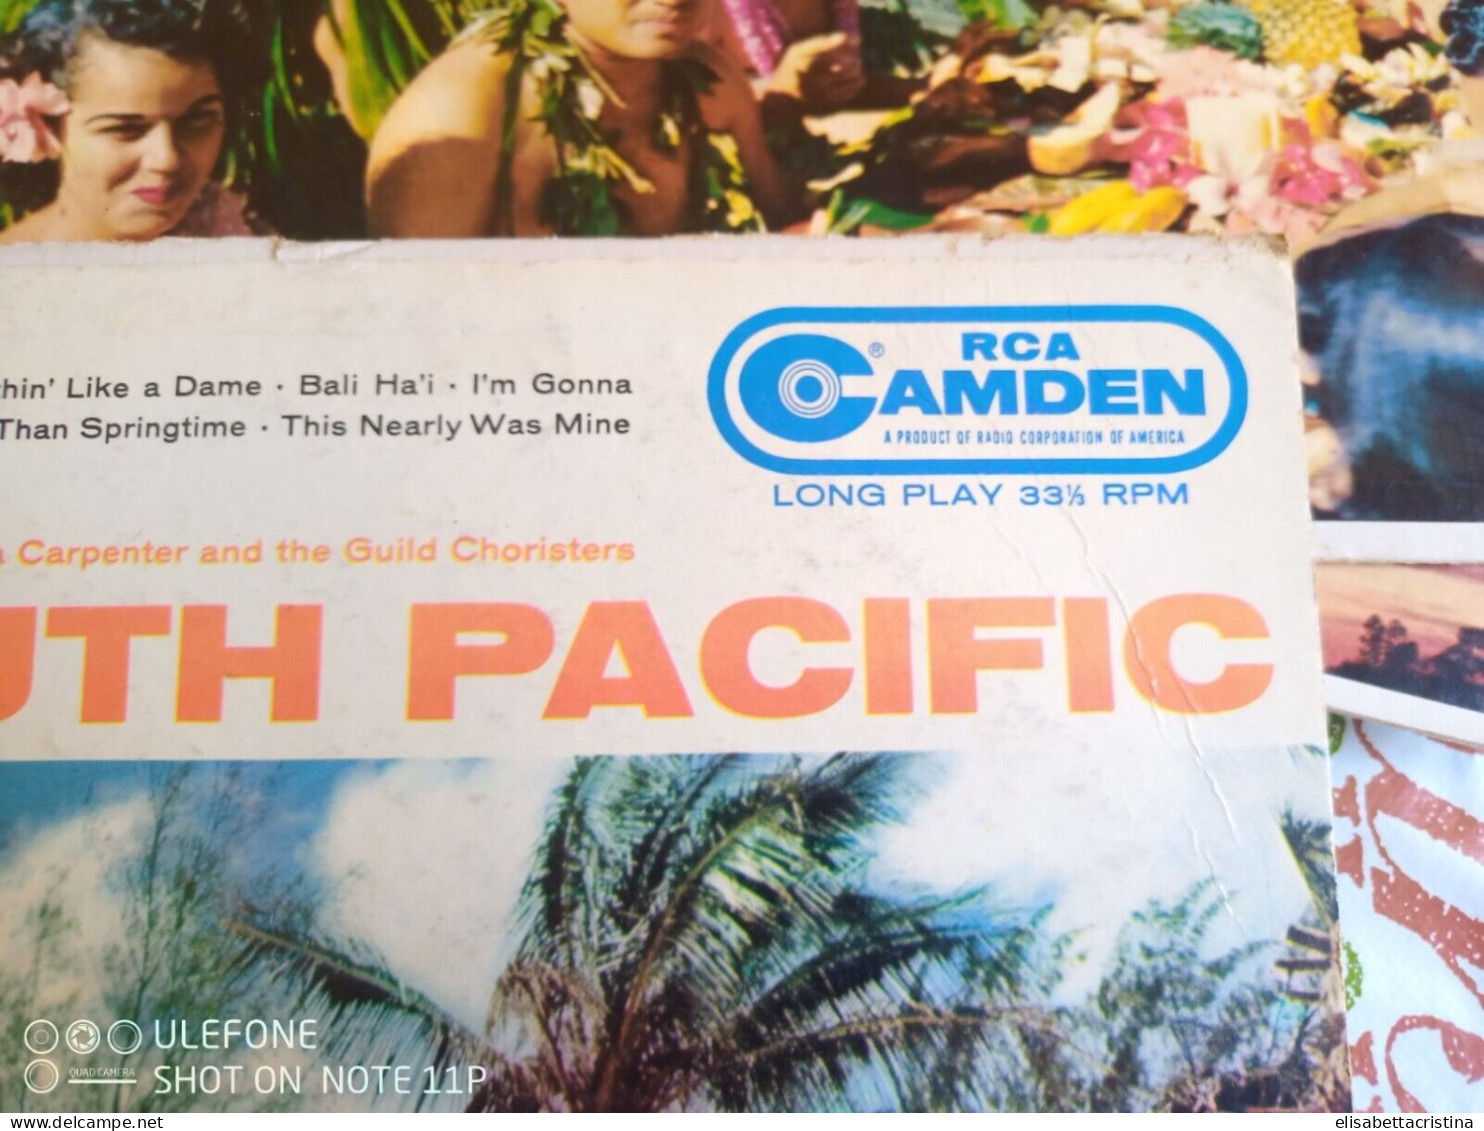 Lp 33 Giri "South Pacific" 1958 - Filmmusik